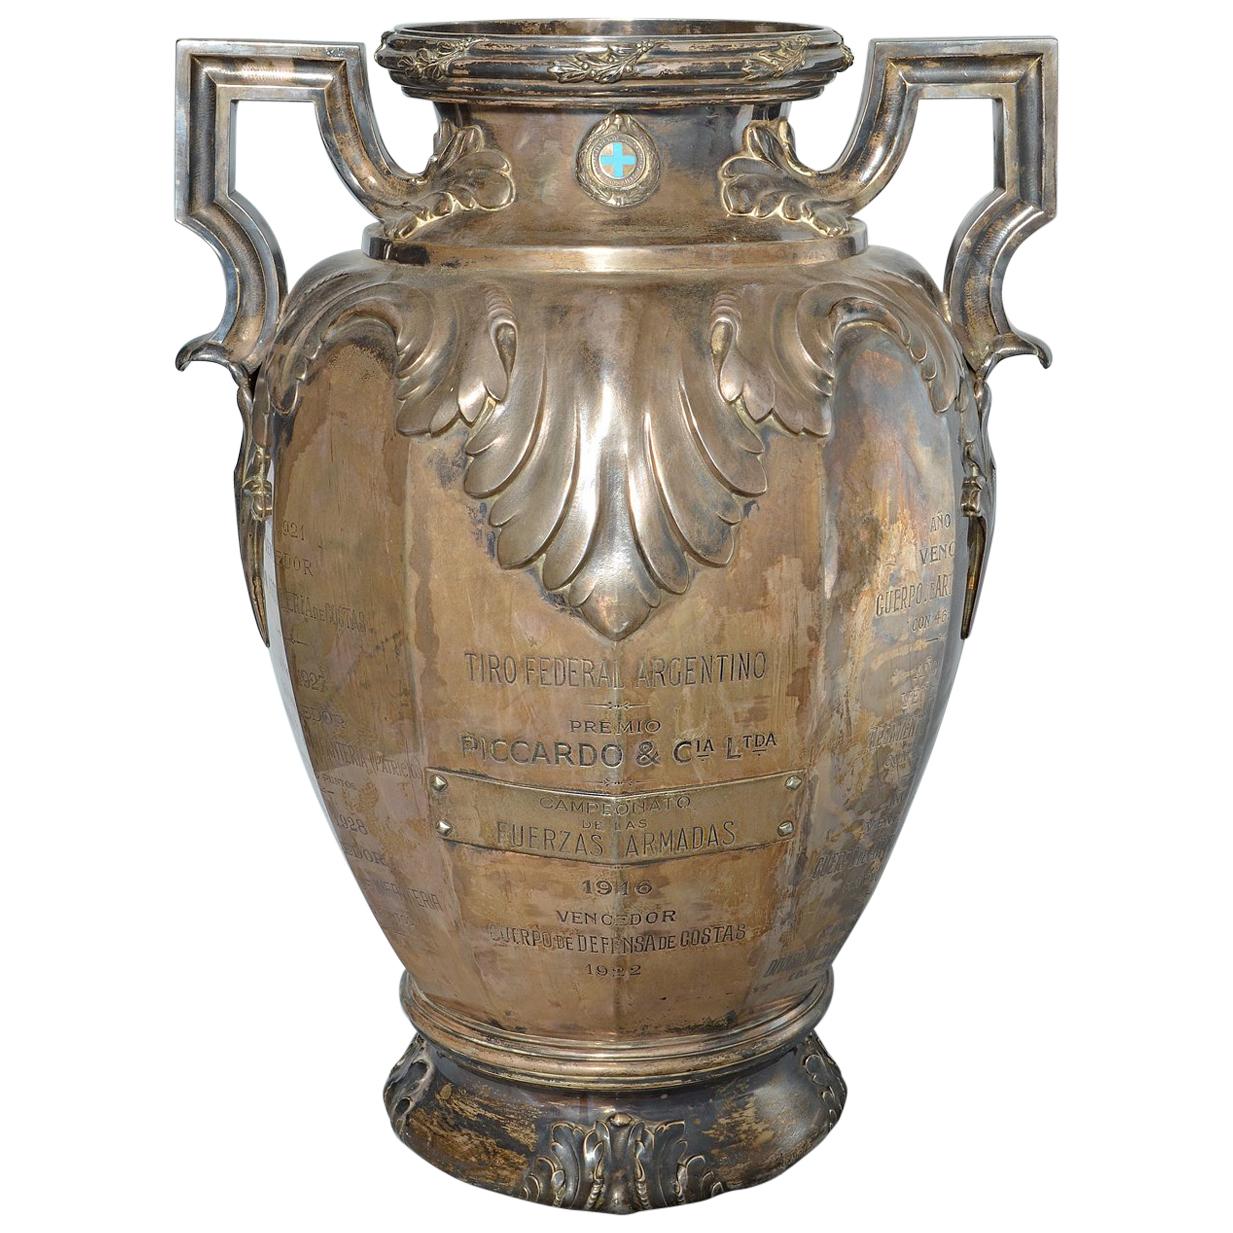 Massive 7kg Silver Vase Trophy/Cup "Tiro Federal Argentino" 1916-1939, Hallmark